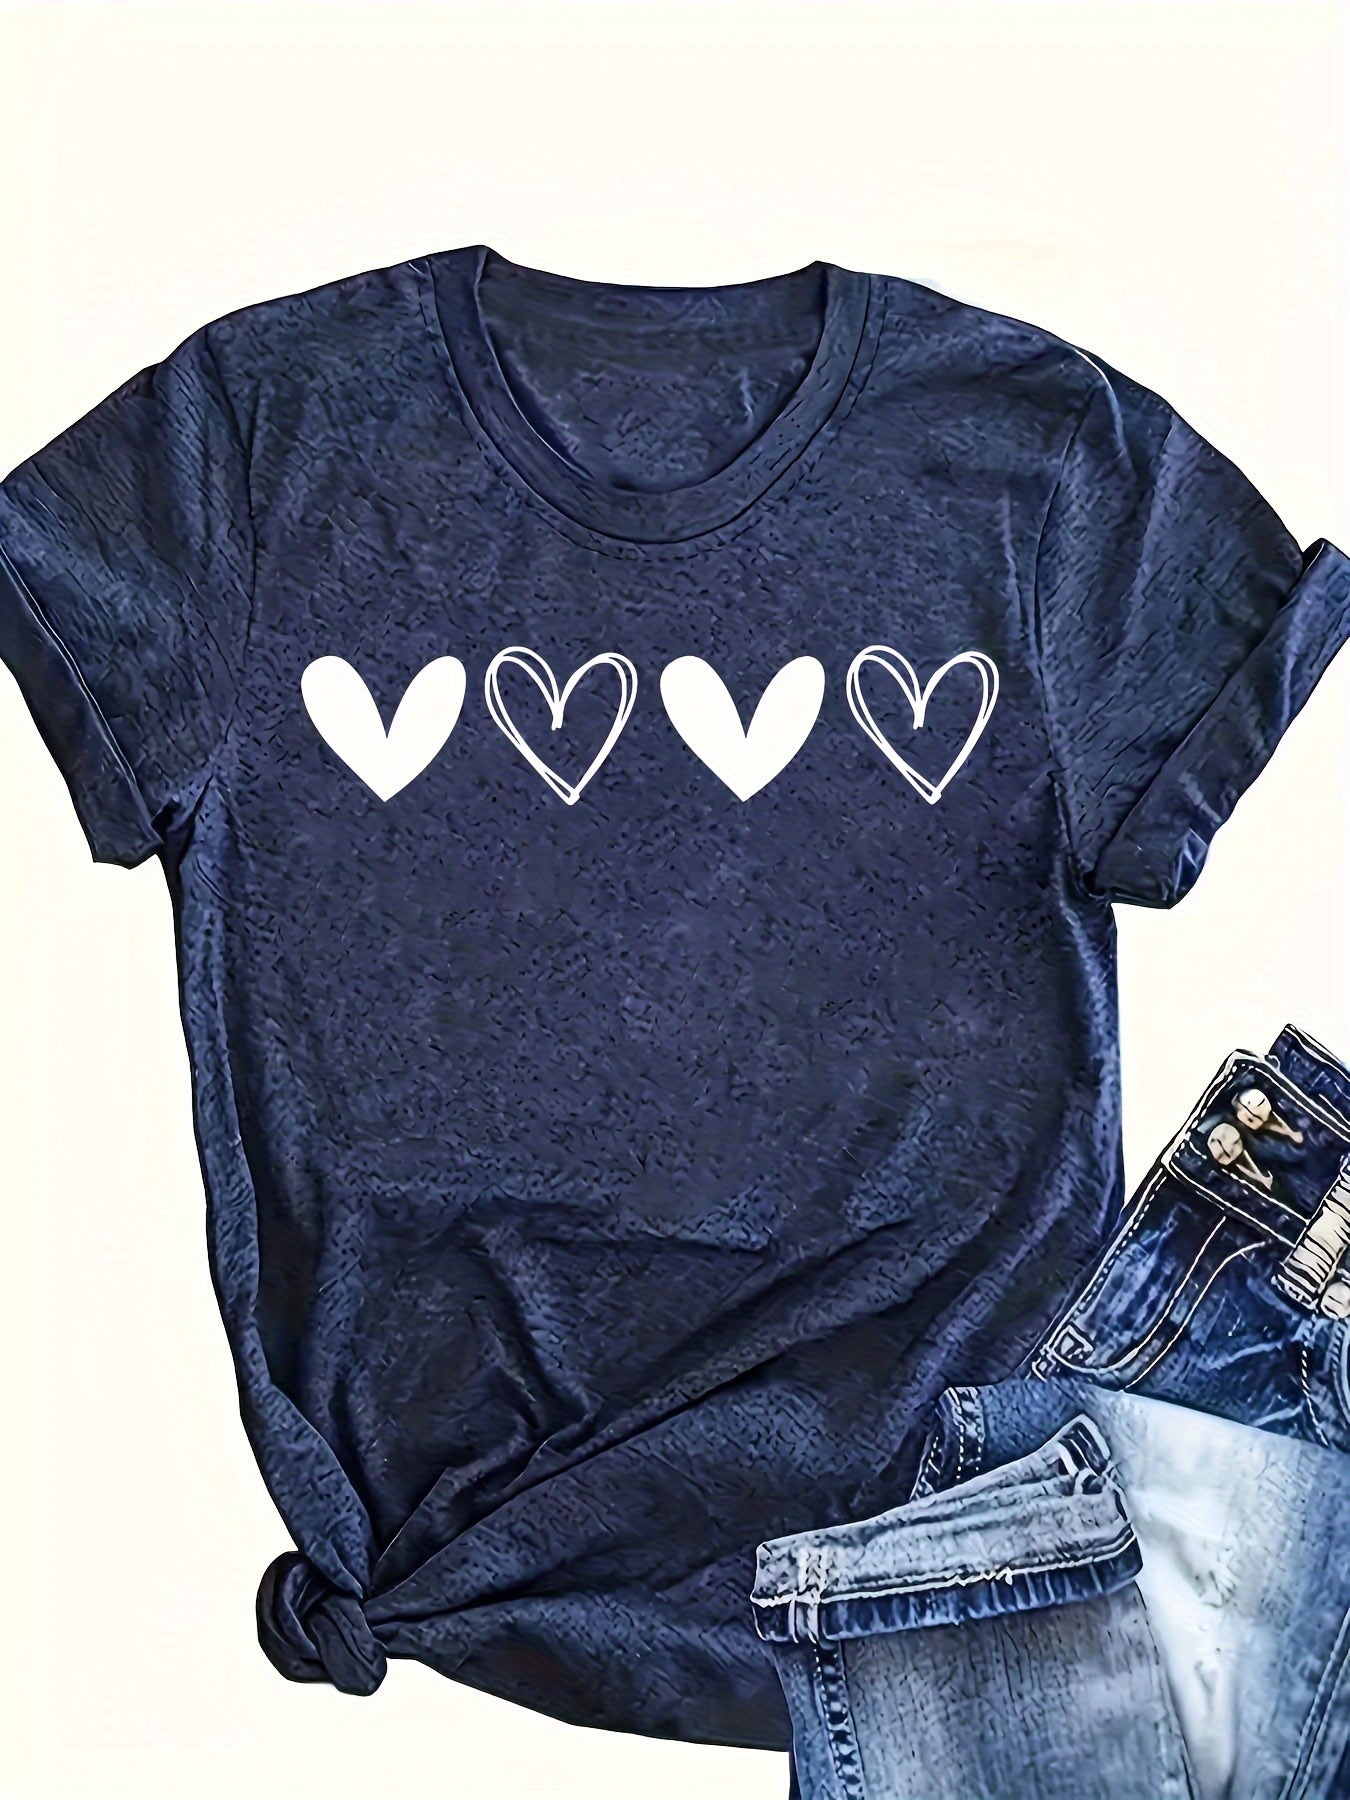 Heart Print Crew Neck T-Shirt, Cute Short Sleeve T-Shirt For Spring & Summer, Women's Clothing